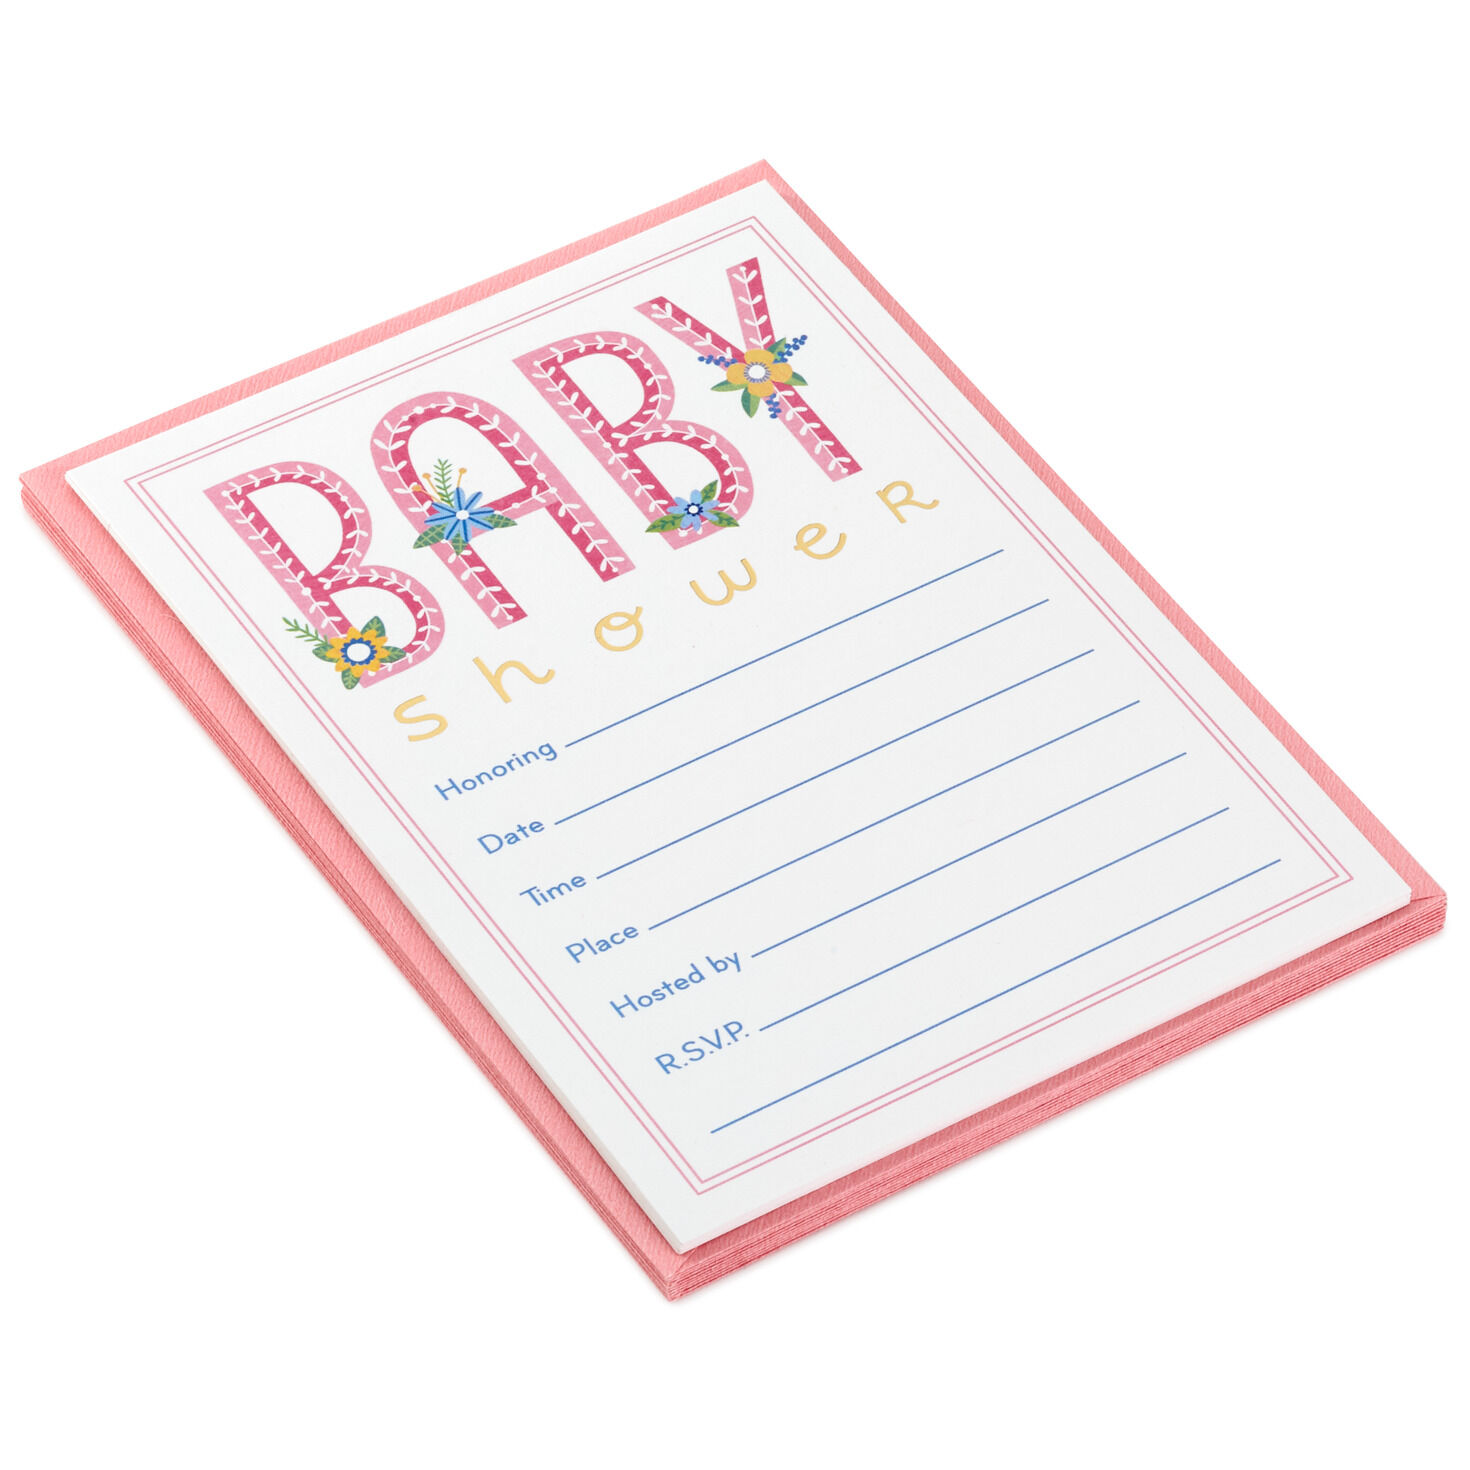 Hallmark Pink Bridal Or Baby Shower Card w/ envelope No tracking # 